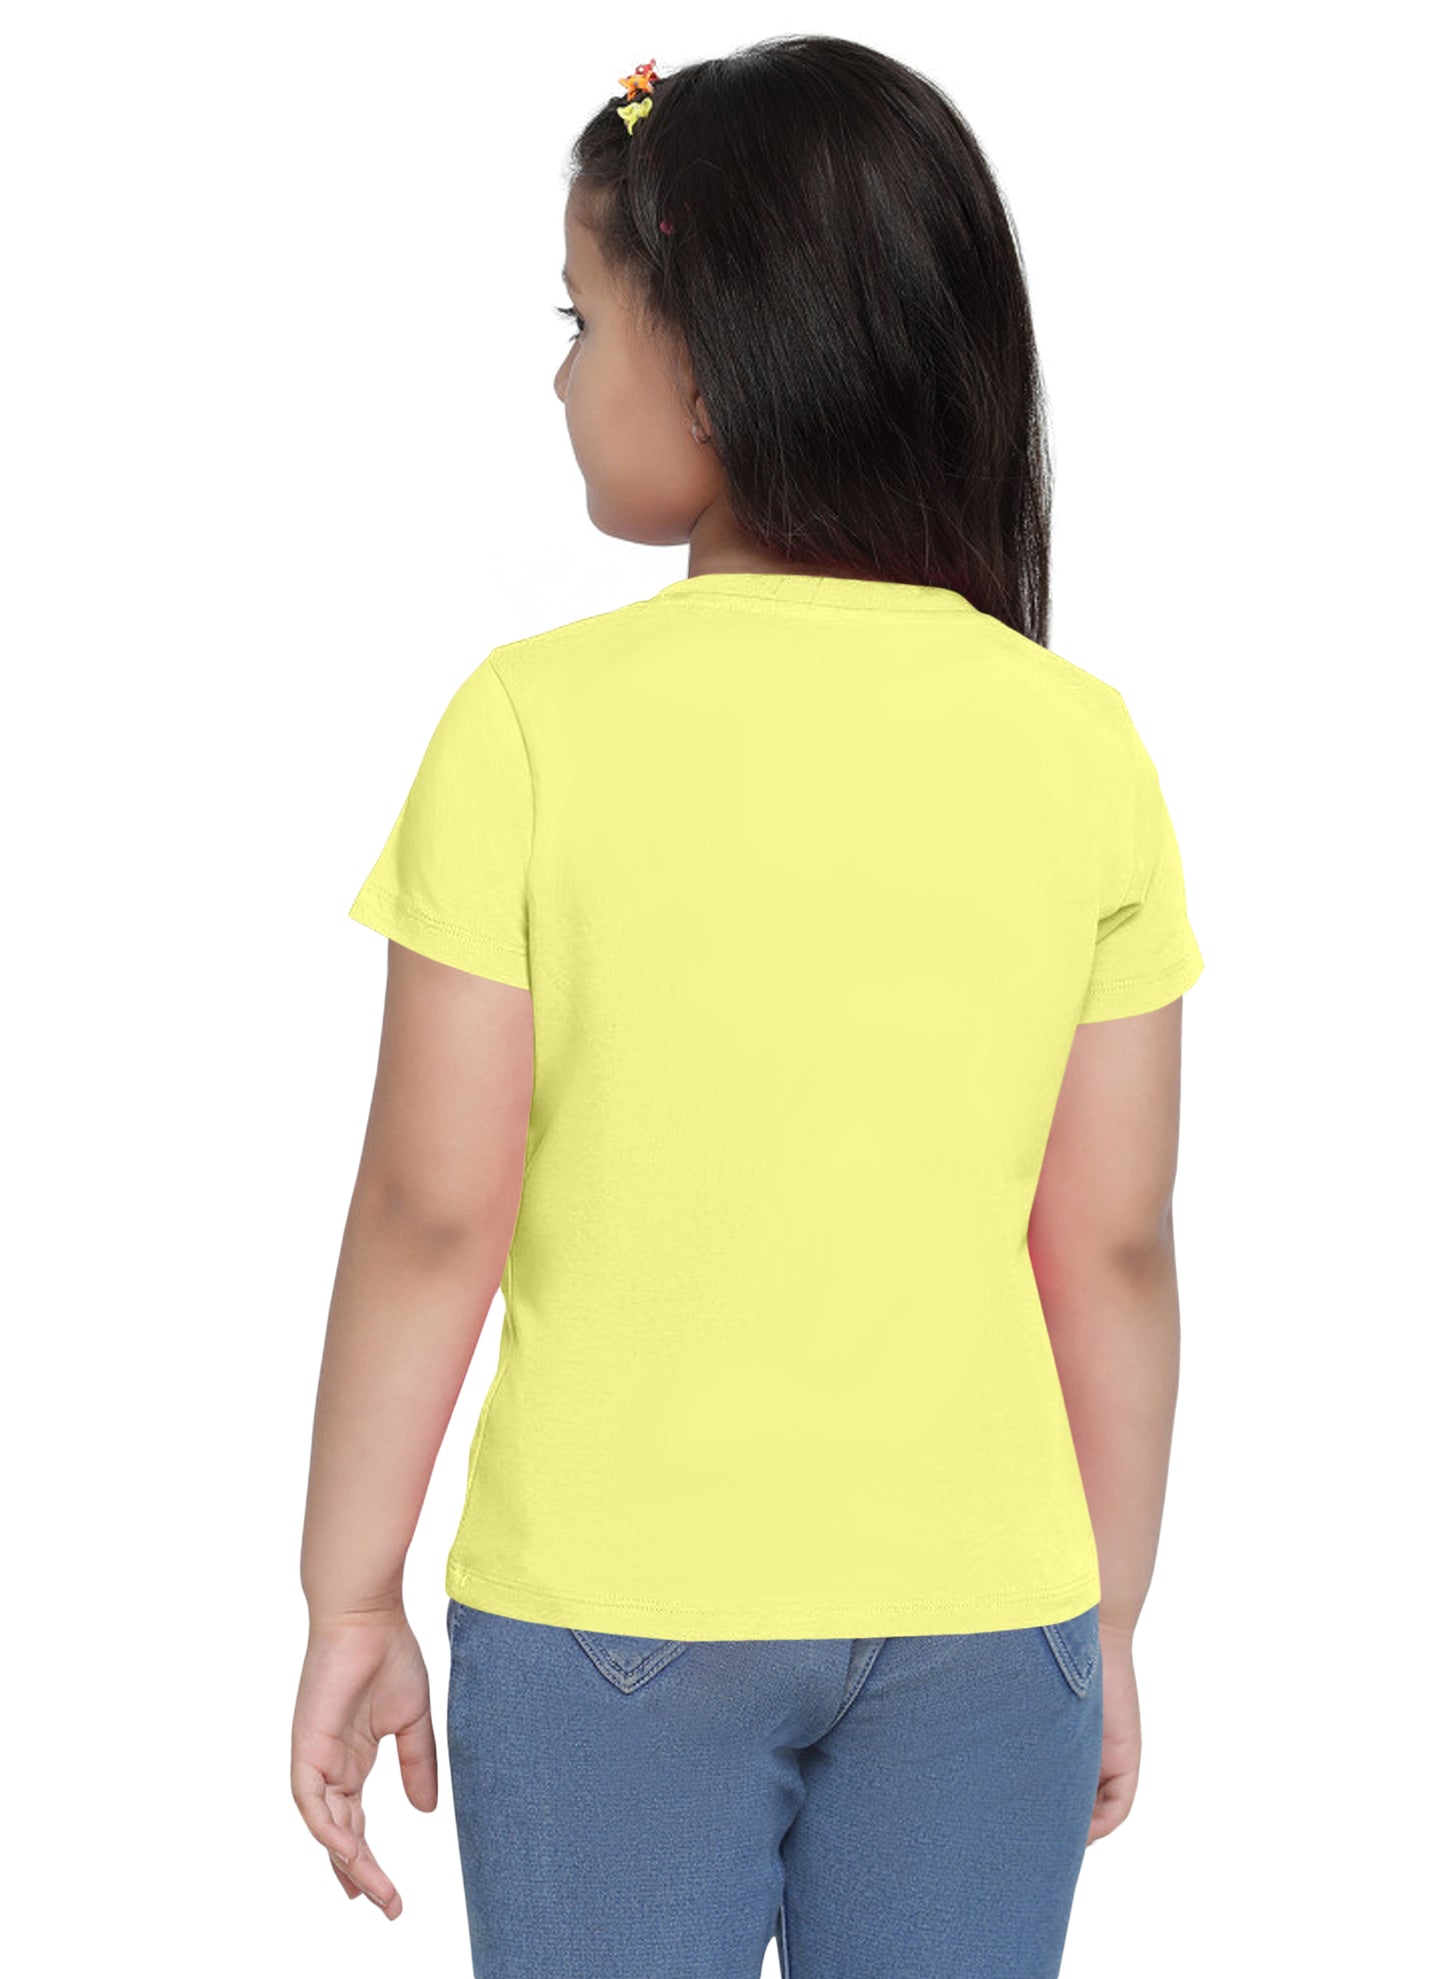 Yellow Sequin T-shirt for Girls